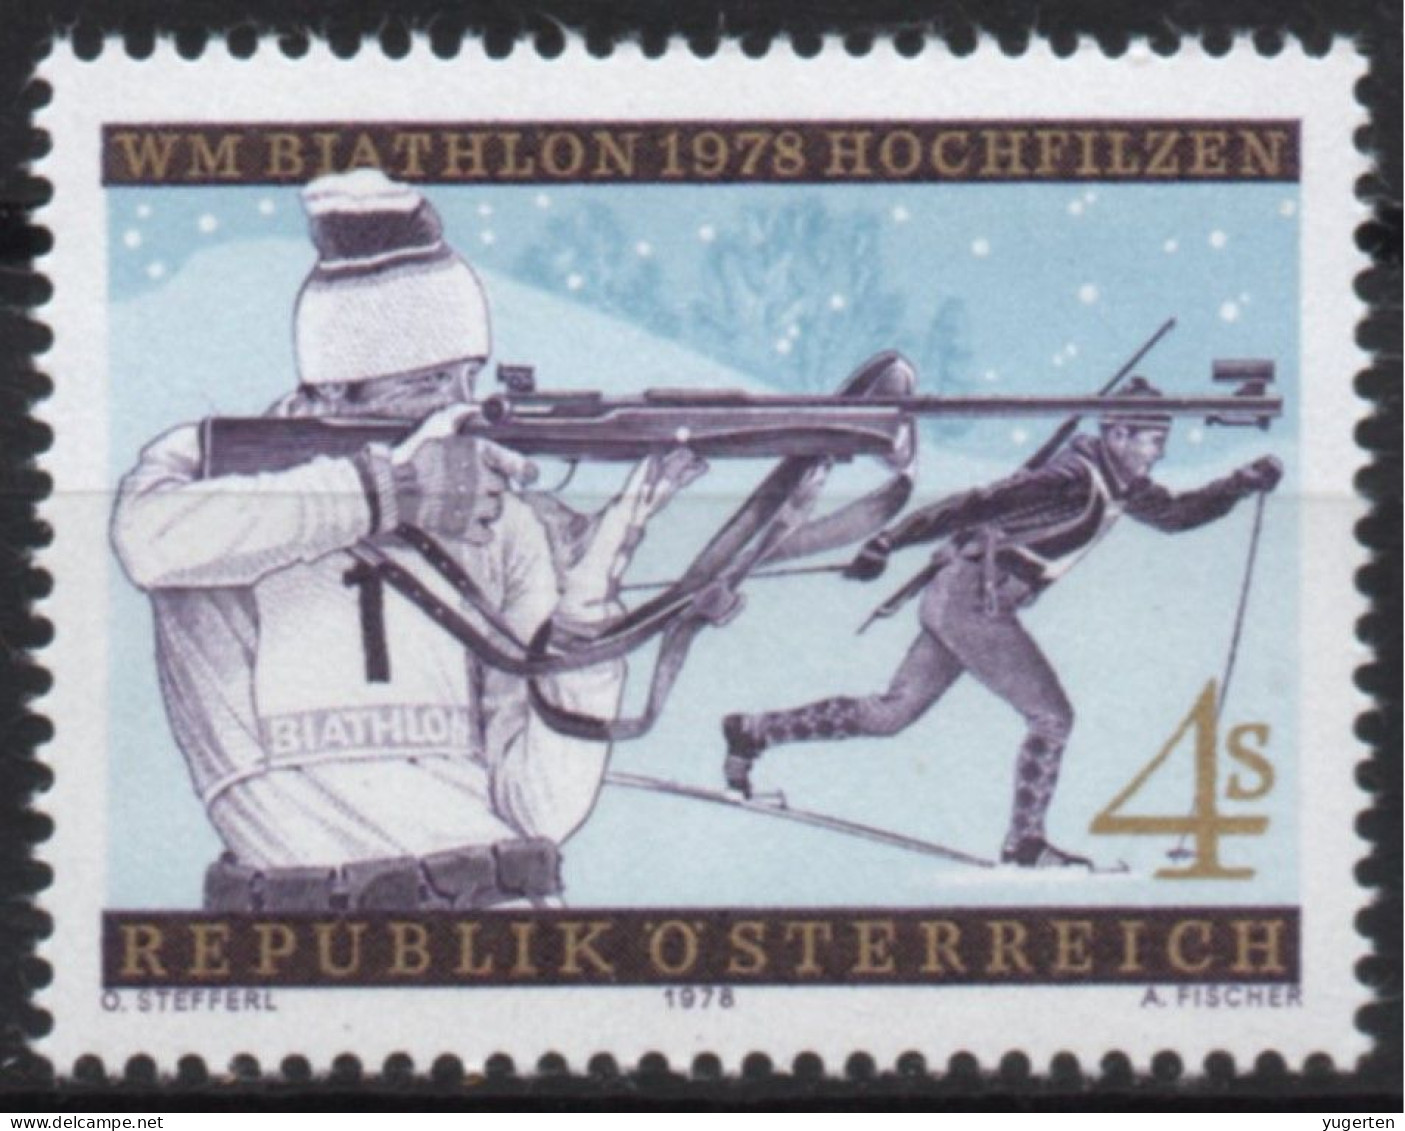 AUSTRIA 1978 - 1v - MNH - Biathlon World Championships - Ski - Skiing - Shoot - Shooting - Rifle - Sport - Shooting (Weapons)